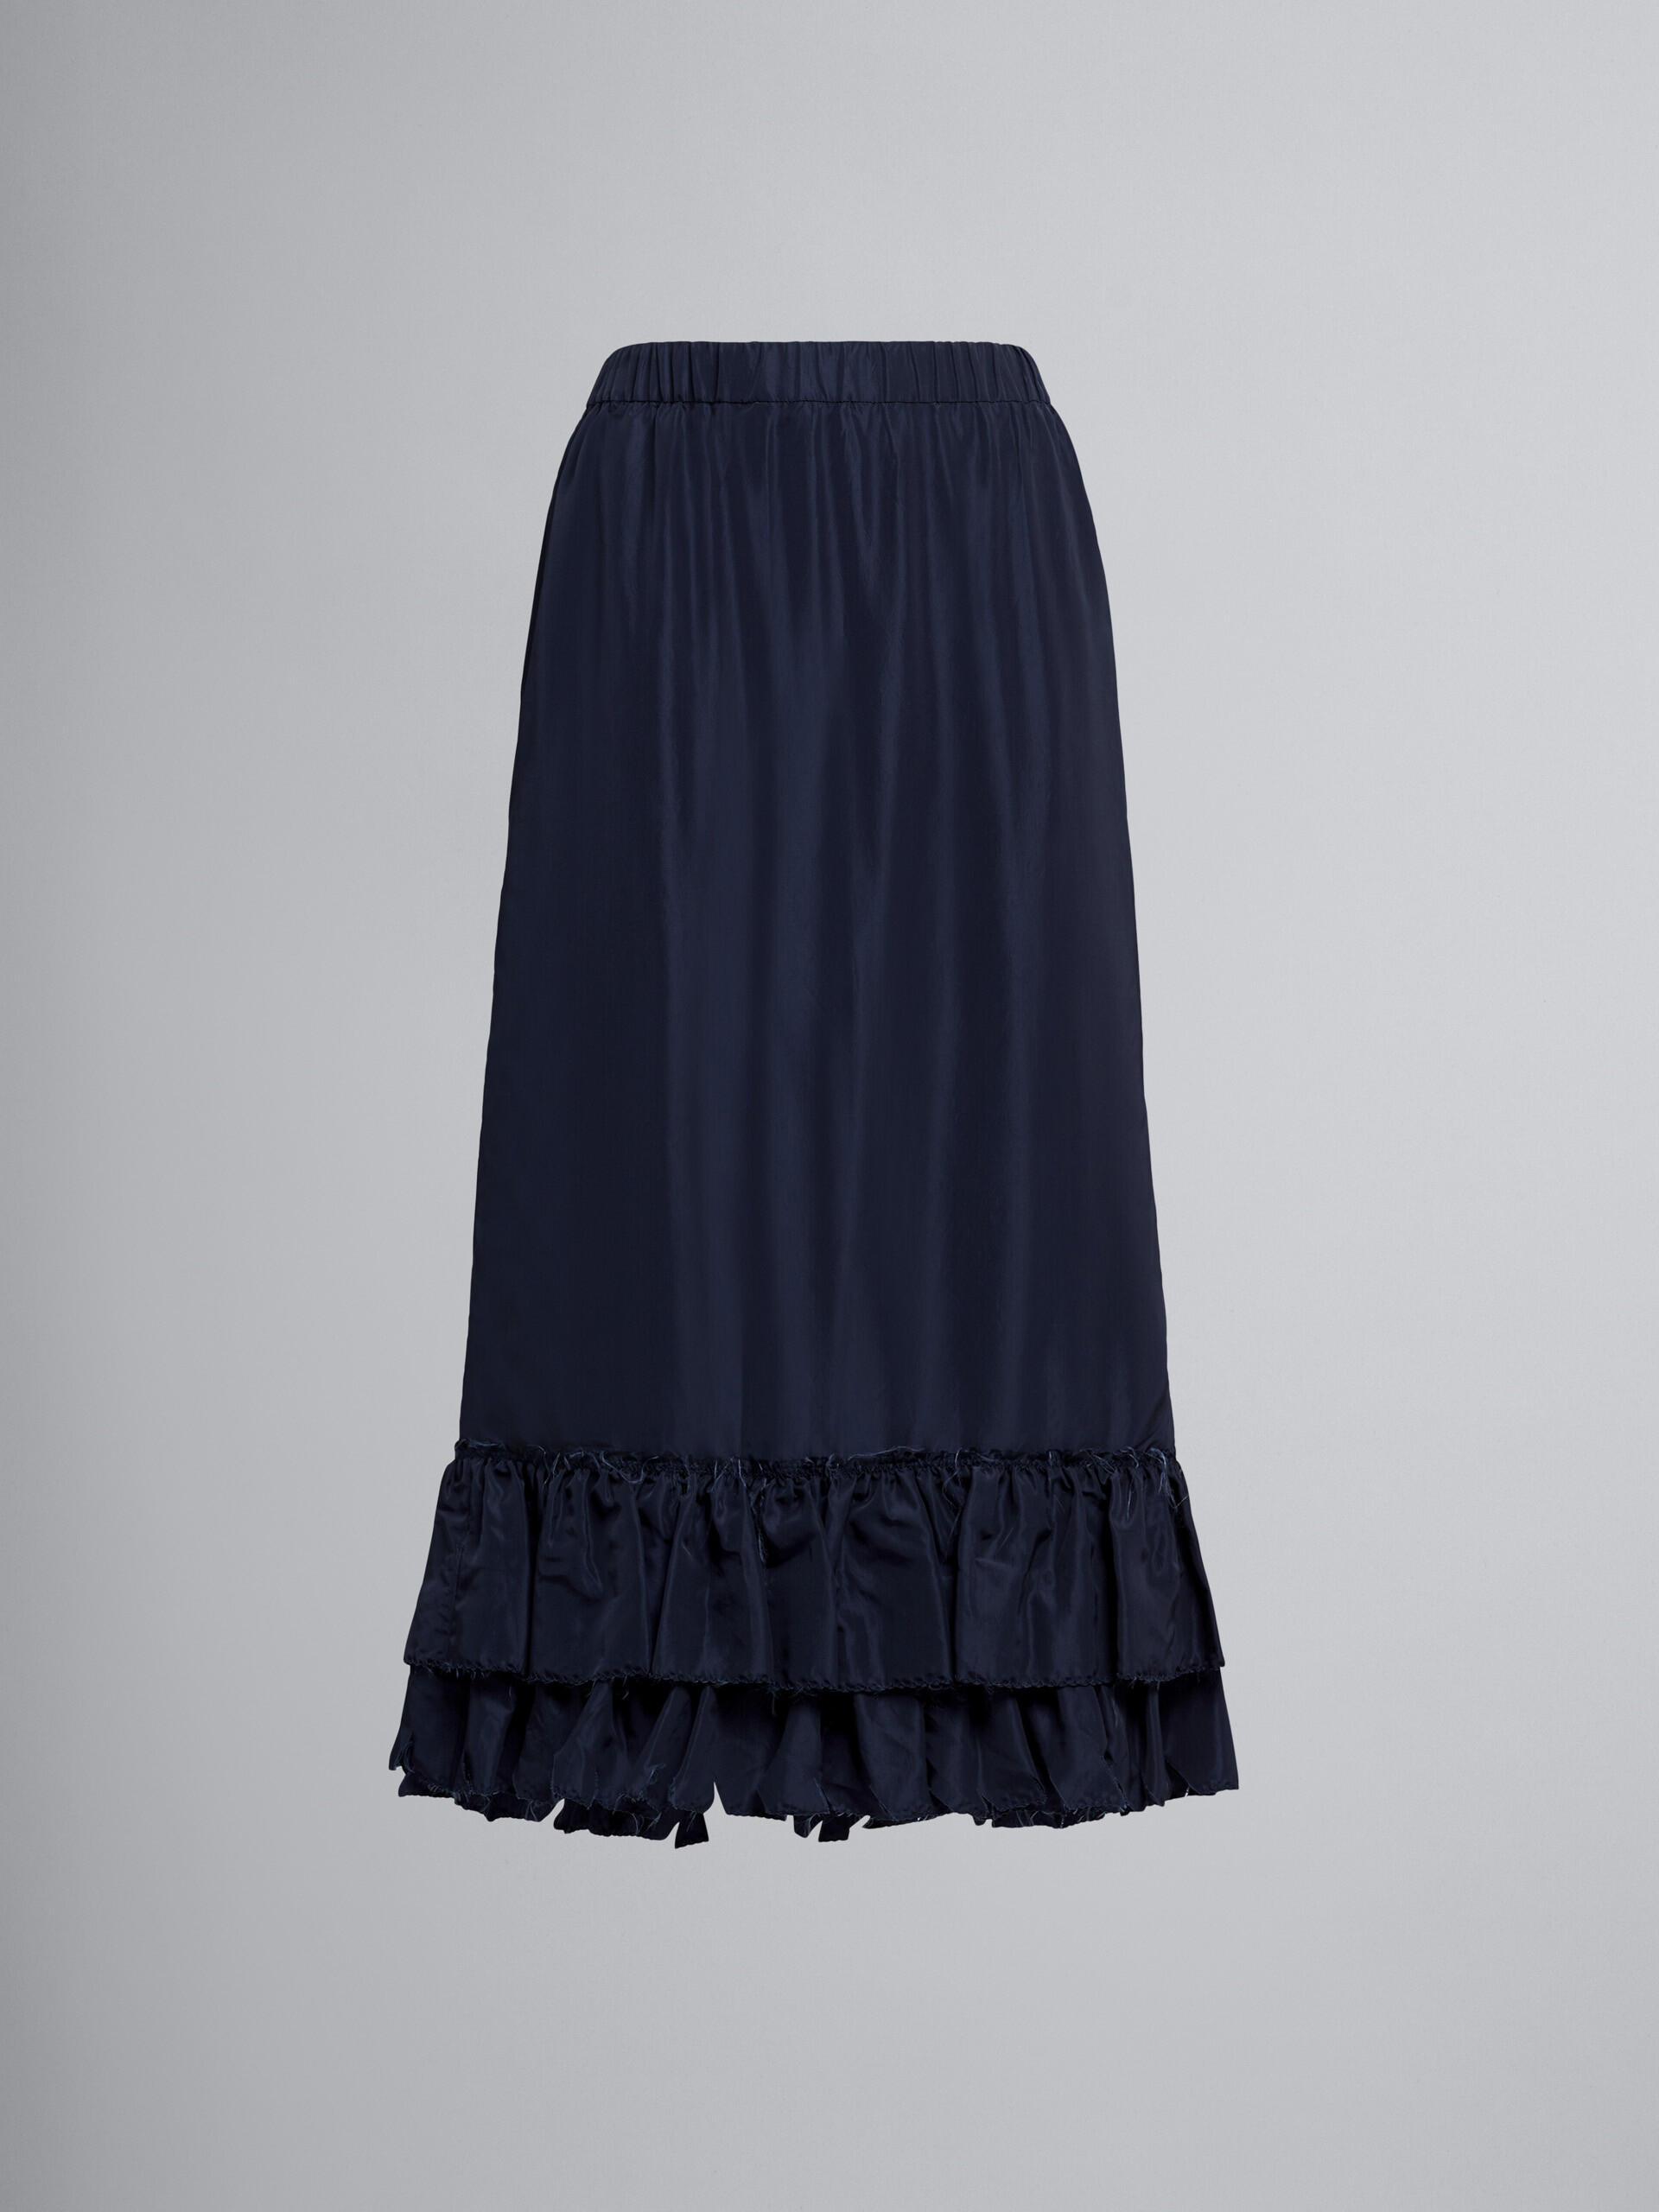 Viscose faille skirt - Skirts - Image 1